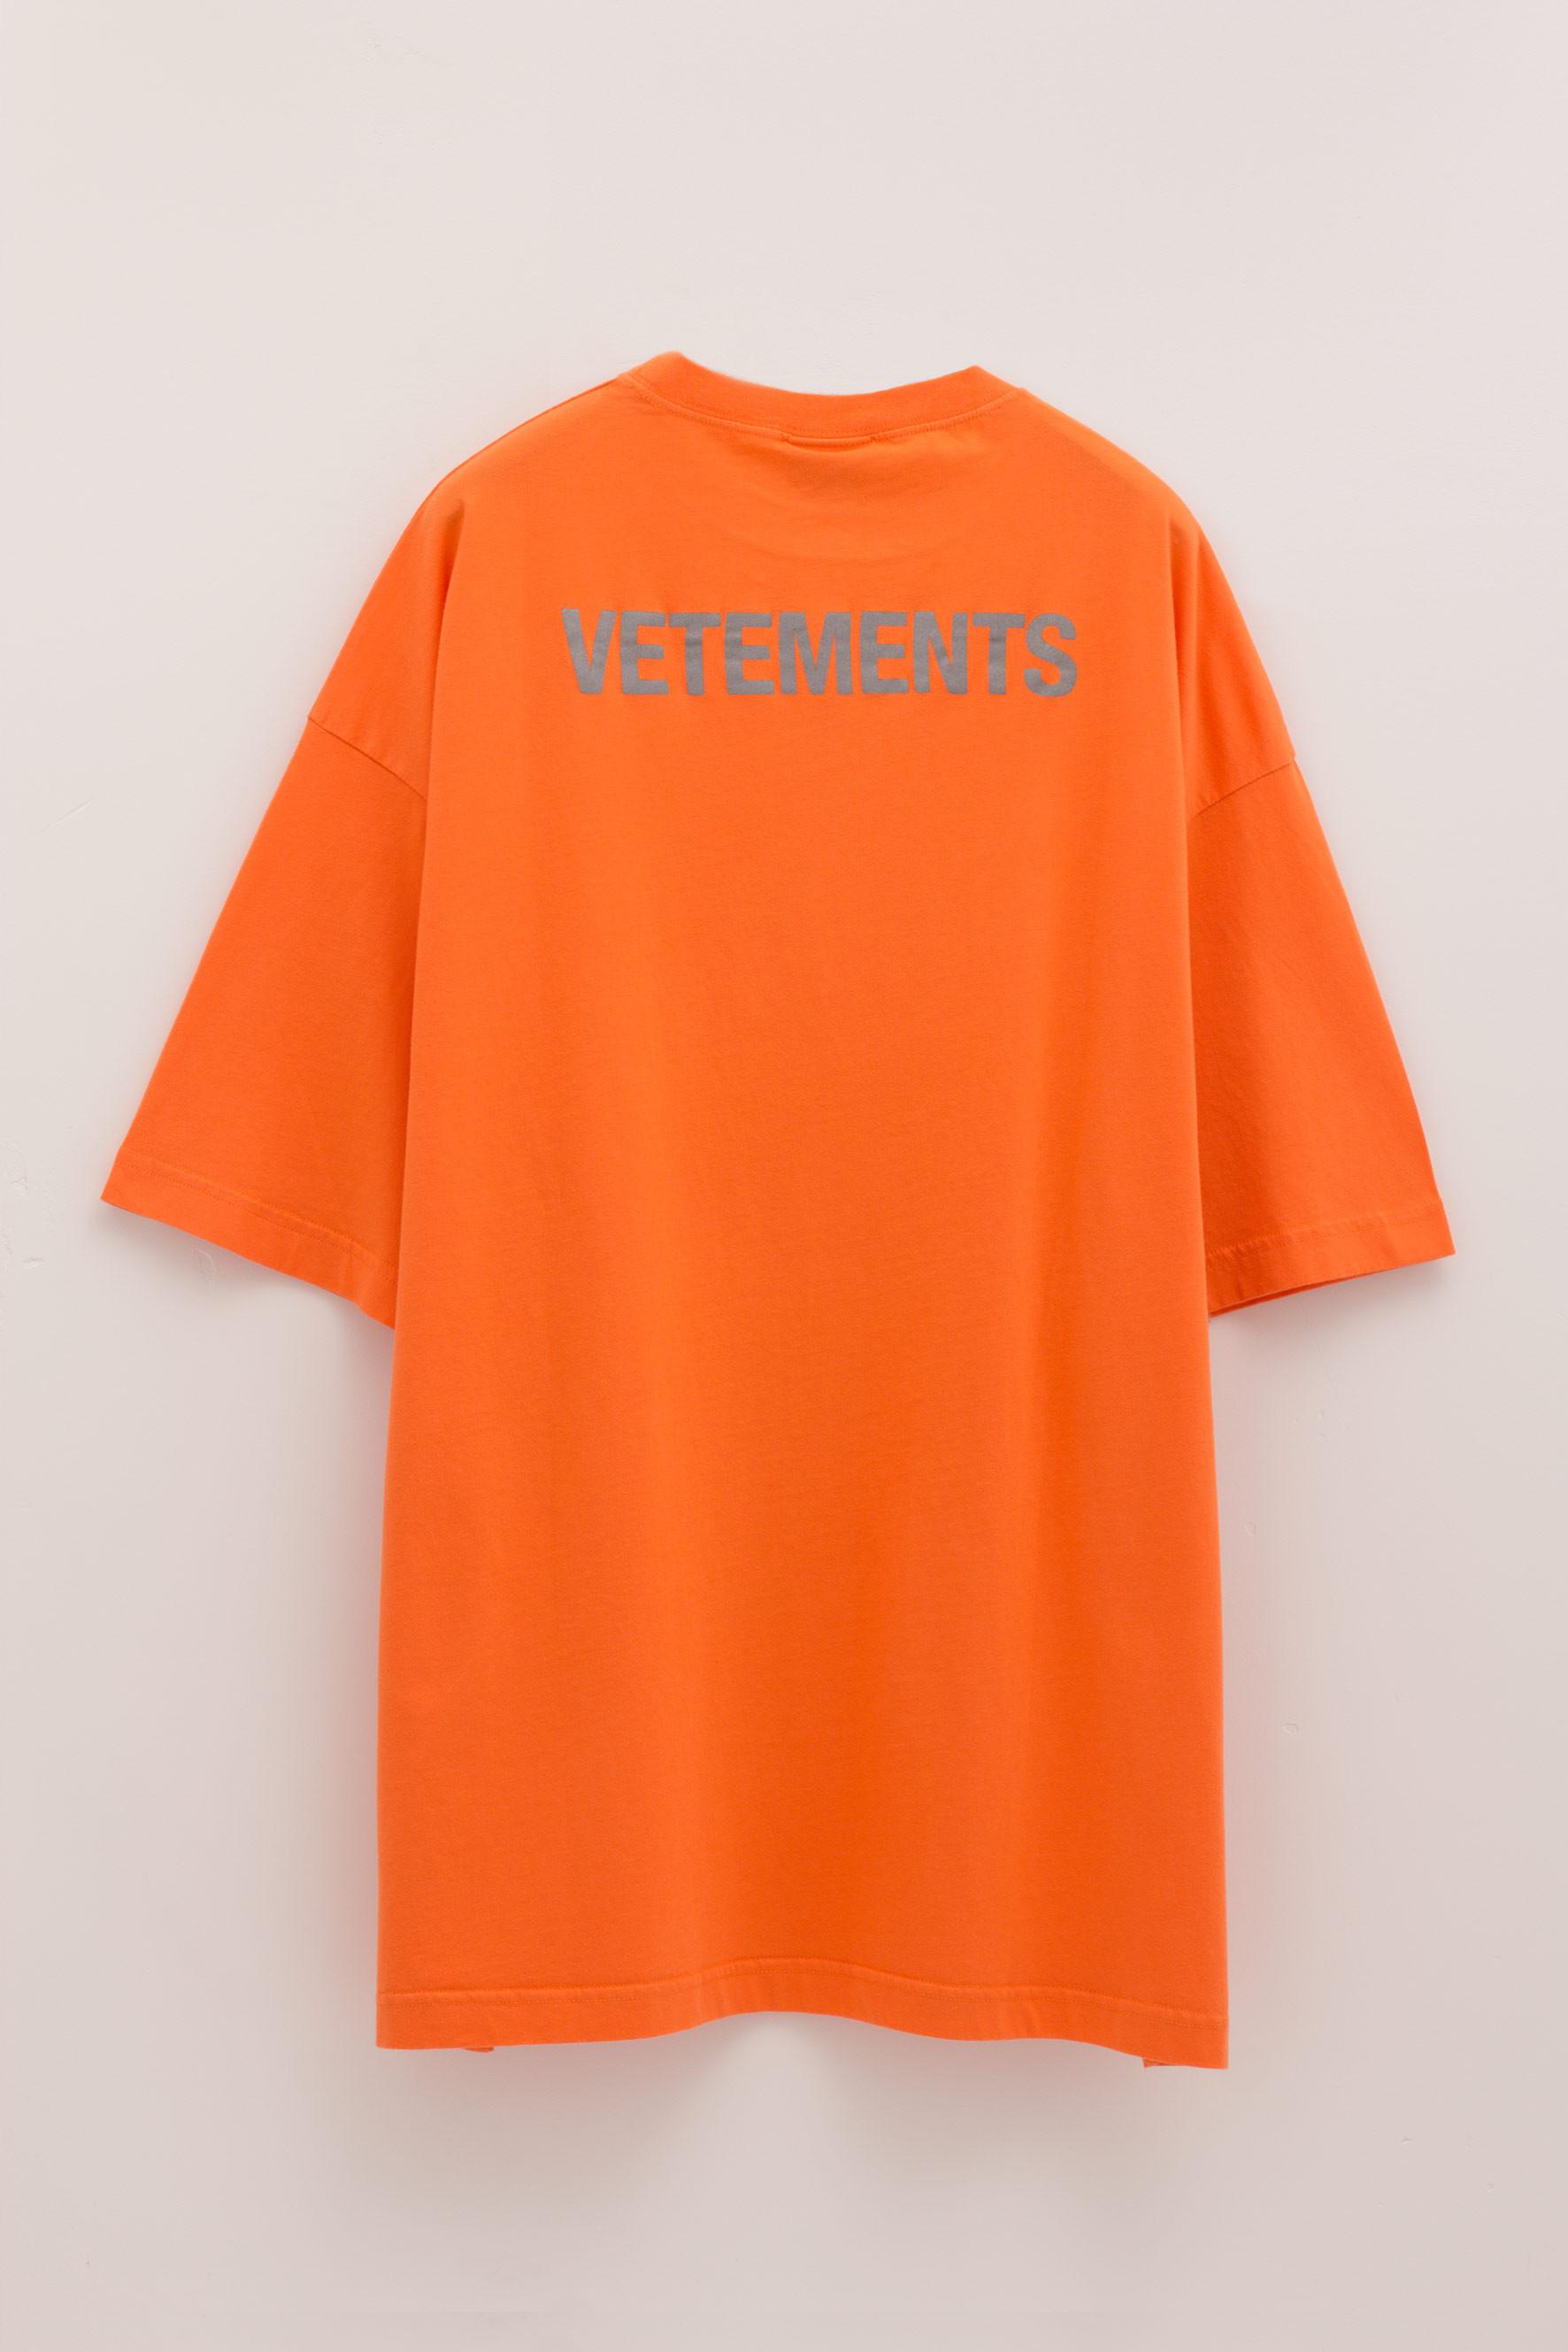 Vetements Staff Reflector T-shirt in Orange for Men | Lyst